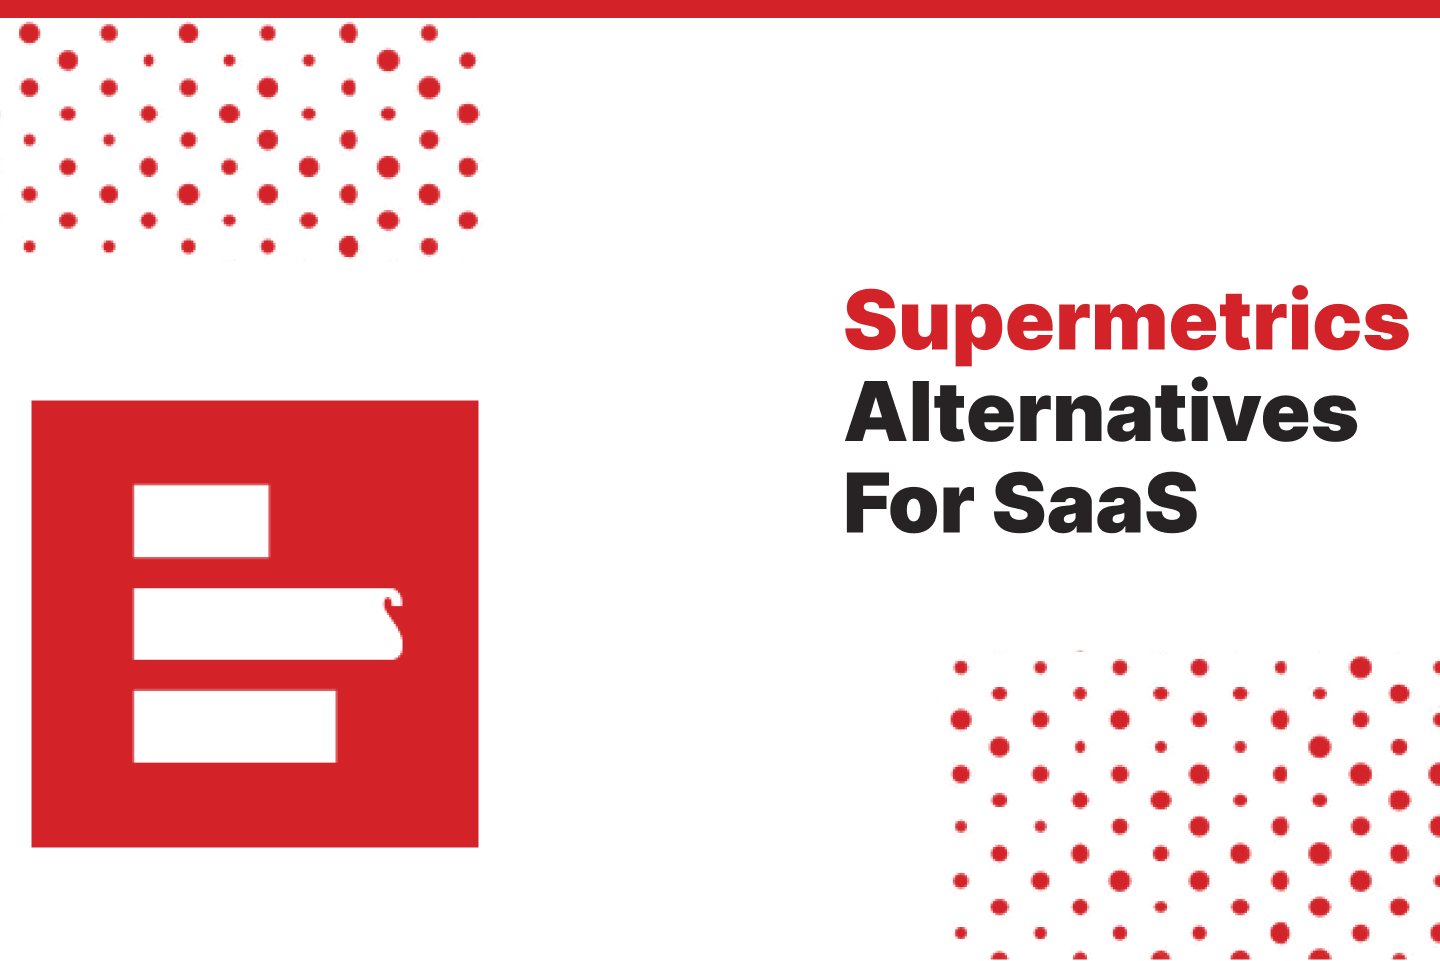 Top 8 Supermetrics Alternatives For Your SaaS